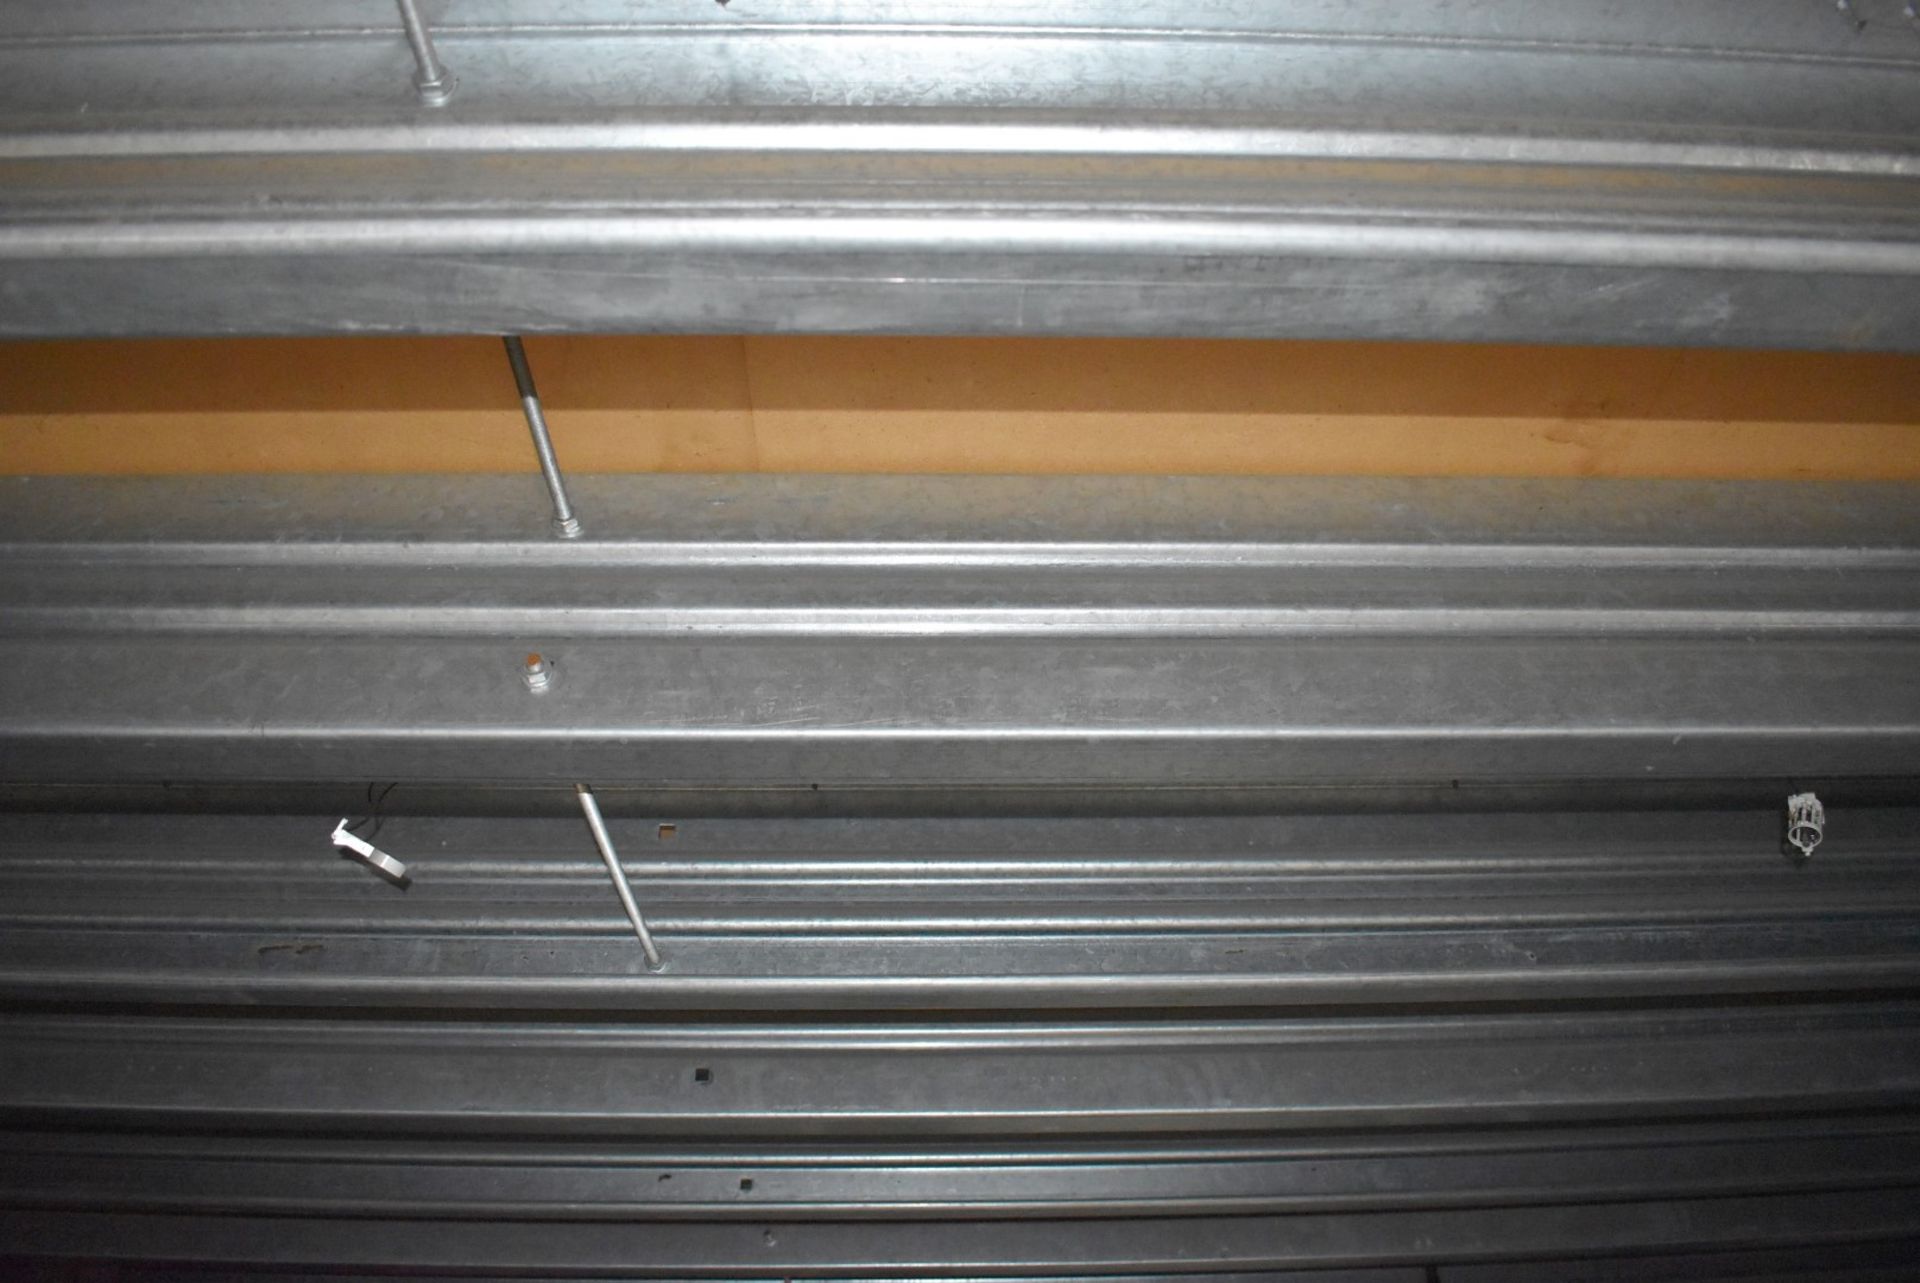 1 x Mezzanine Floor - Heavy Duty Steel Construction With Access Ladder - Size: W1000 x D325 cms - Image 5 of 18